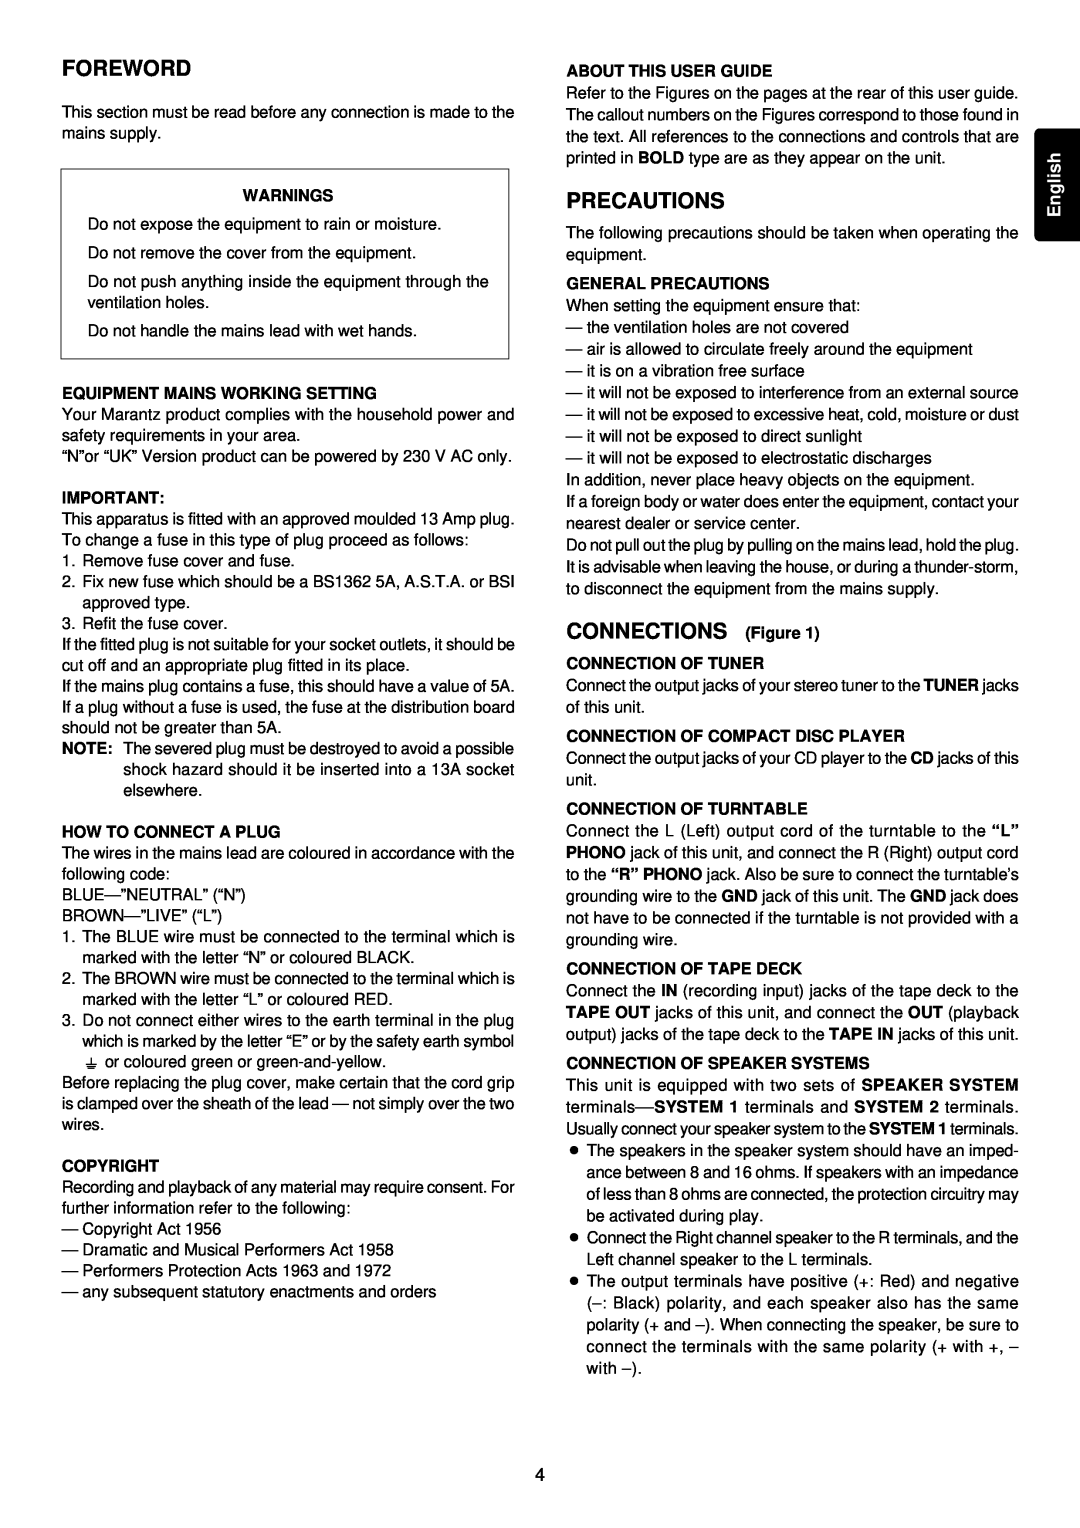 Marantz PM4000 manual Foreword, Precautions, CONNECTIONS Figure, English 